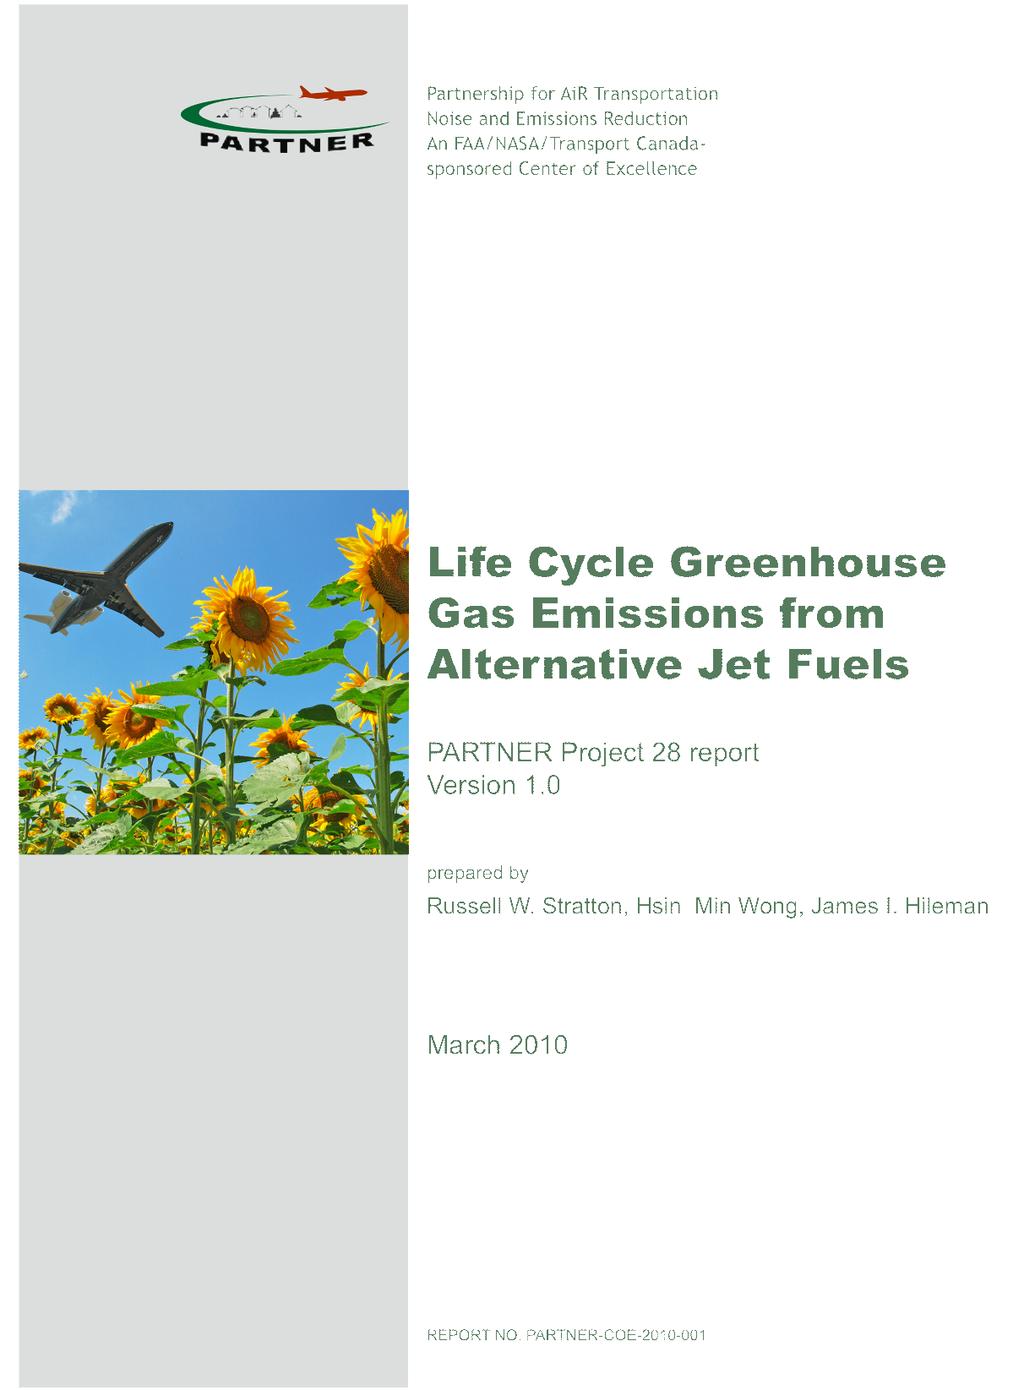 Report on Life Cycle GHG Emissions http://web.mit.edu/aeroastro/partner/reports/proj28/partner-proj28-2010-001.